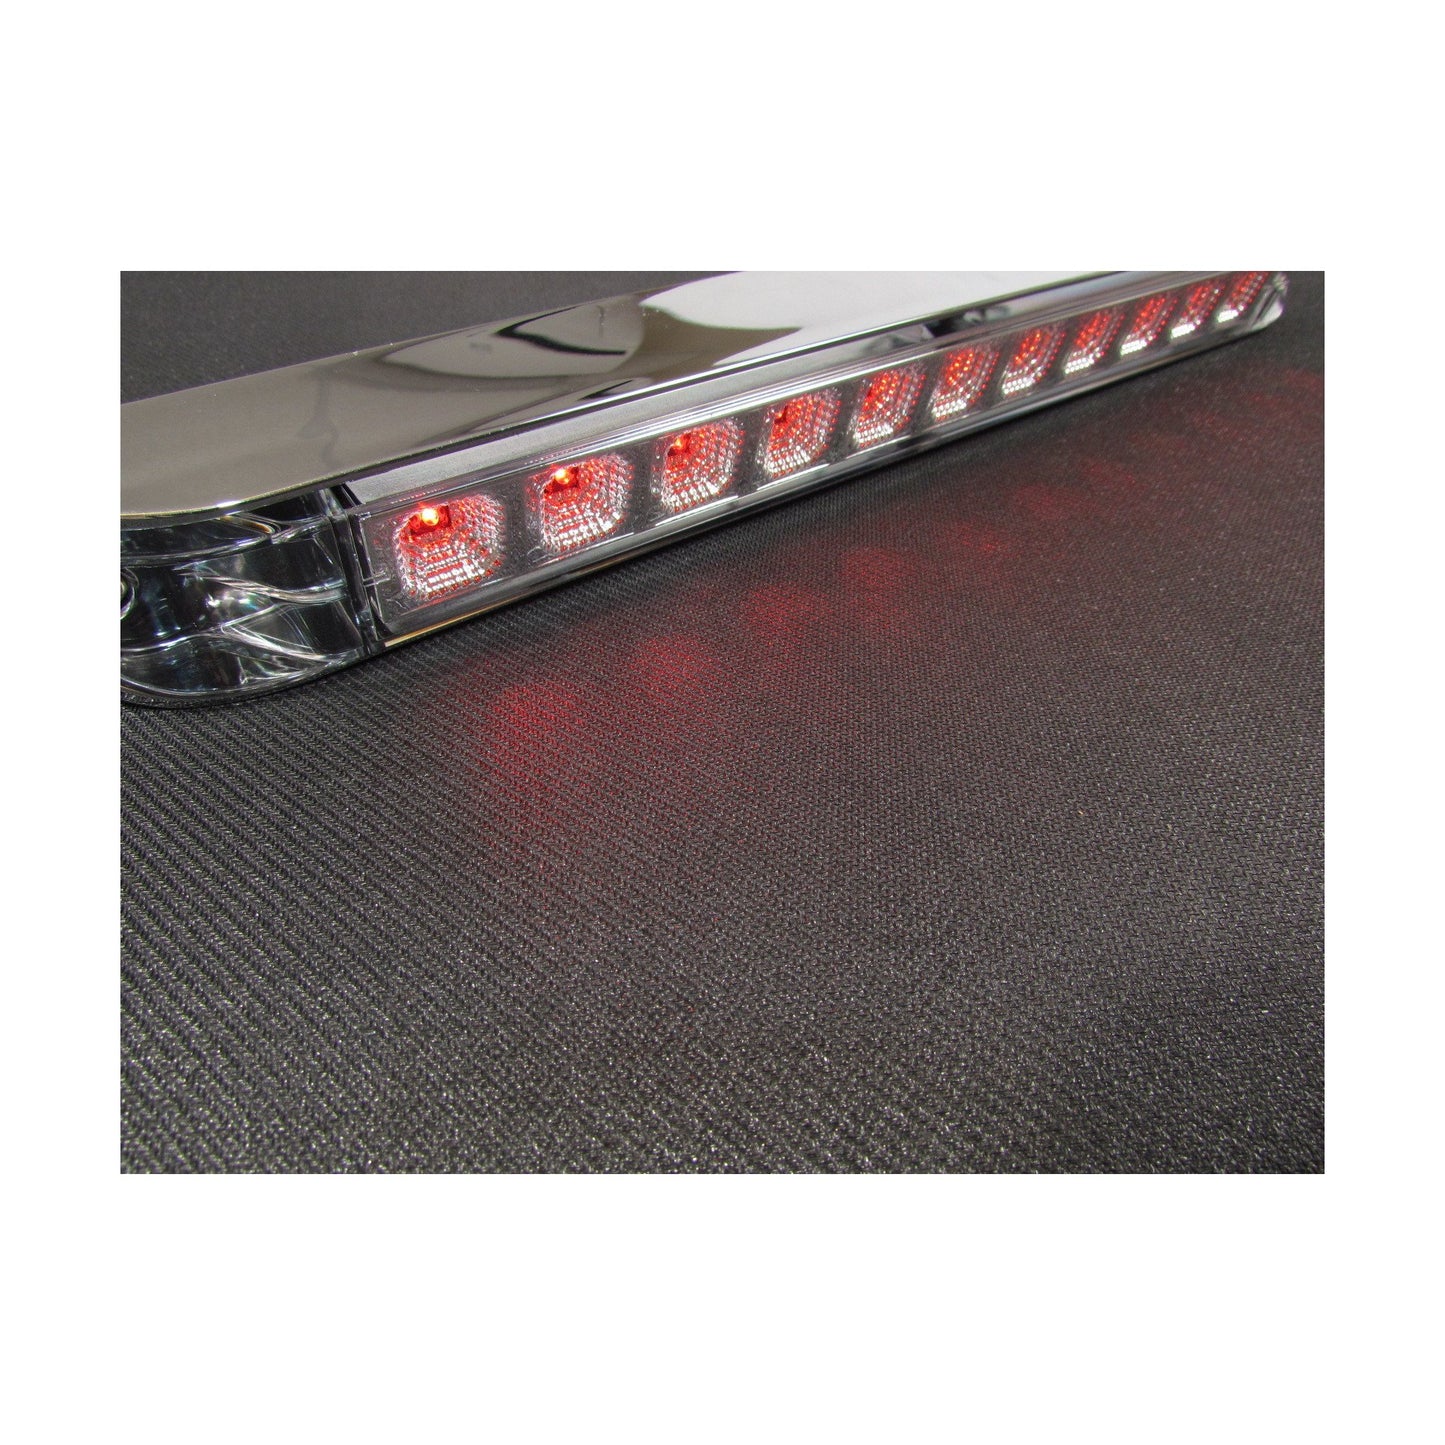 Fortpro 17-6/8" x 2-1/8" Led Light Bar with 11 LEDs and Chromed Bezel